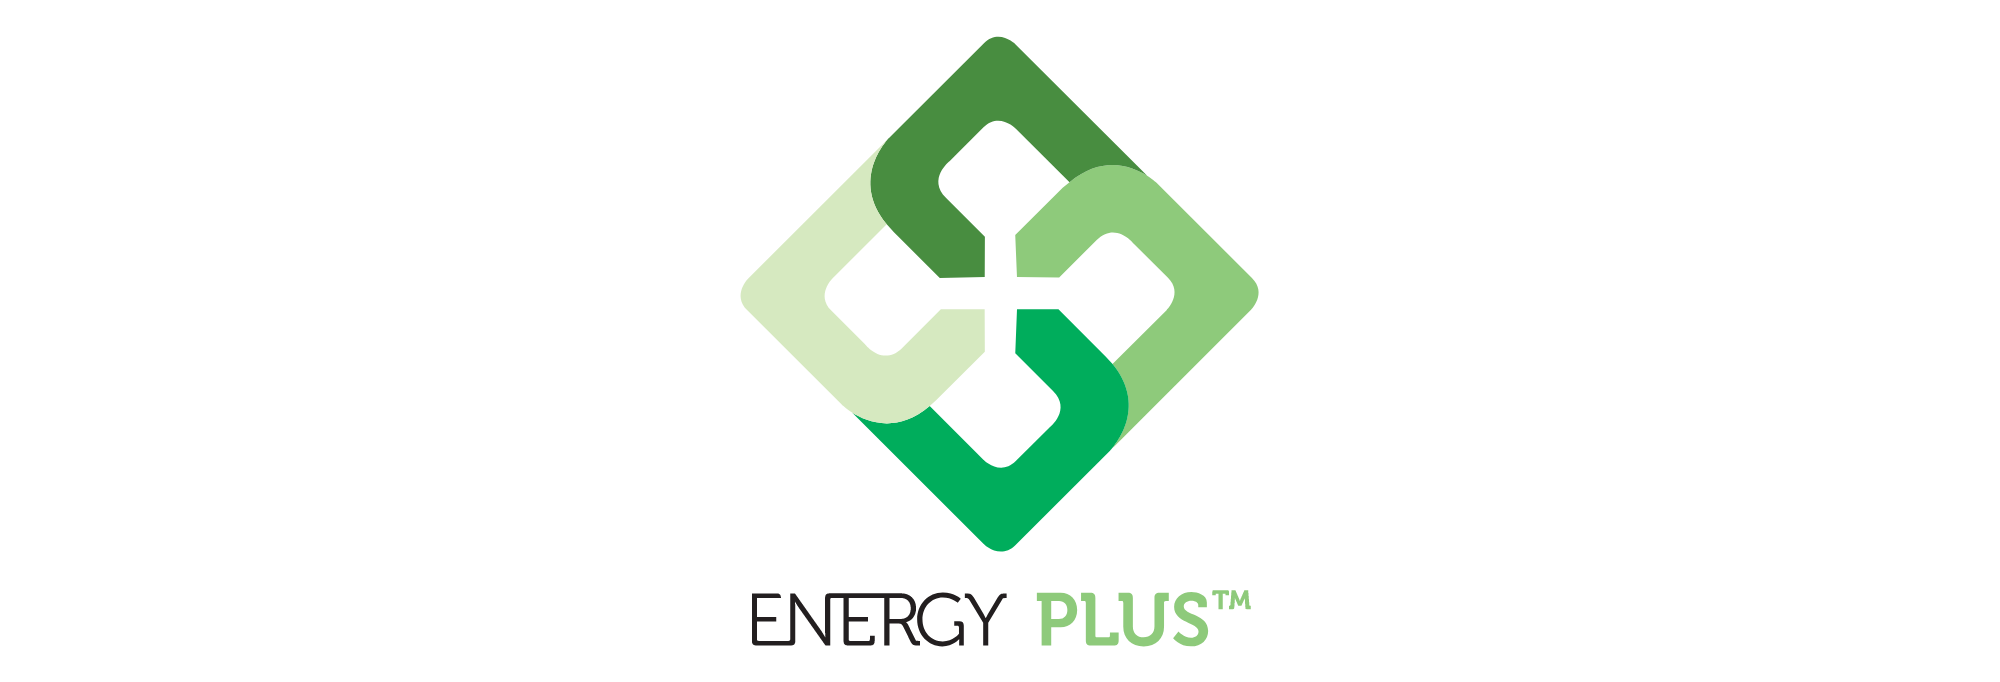 Energy Plus Logo.png